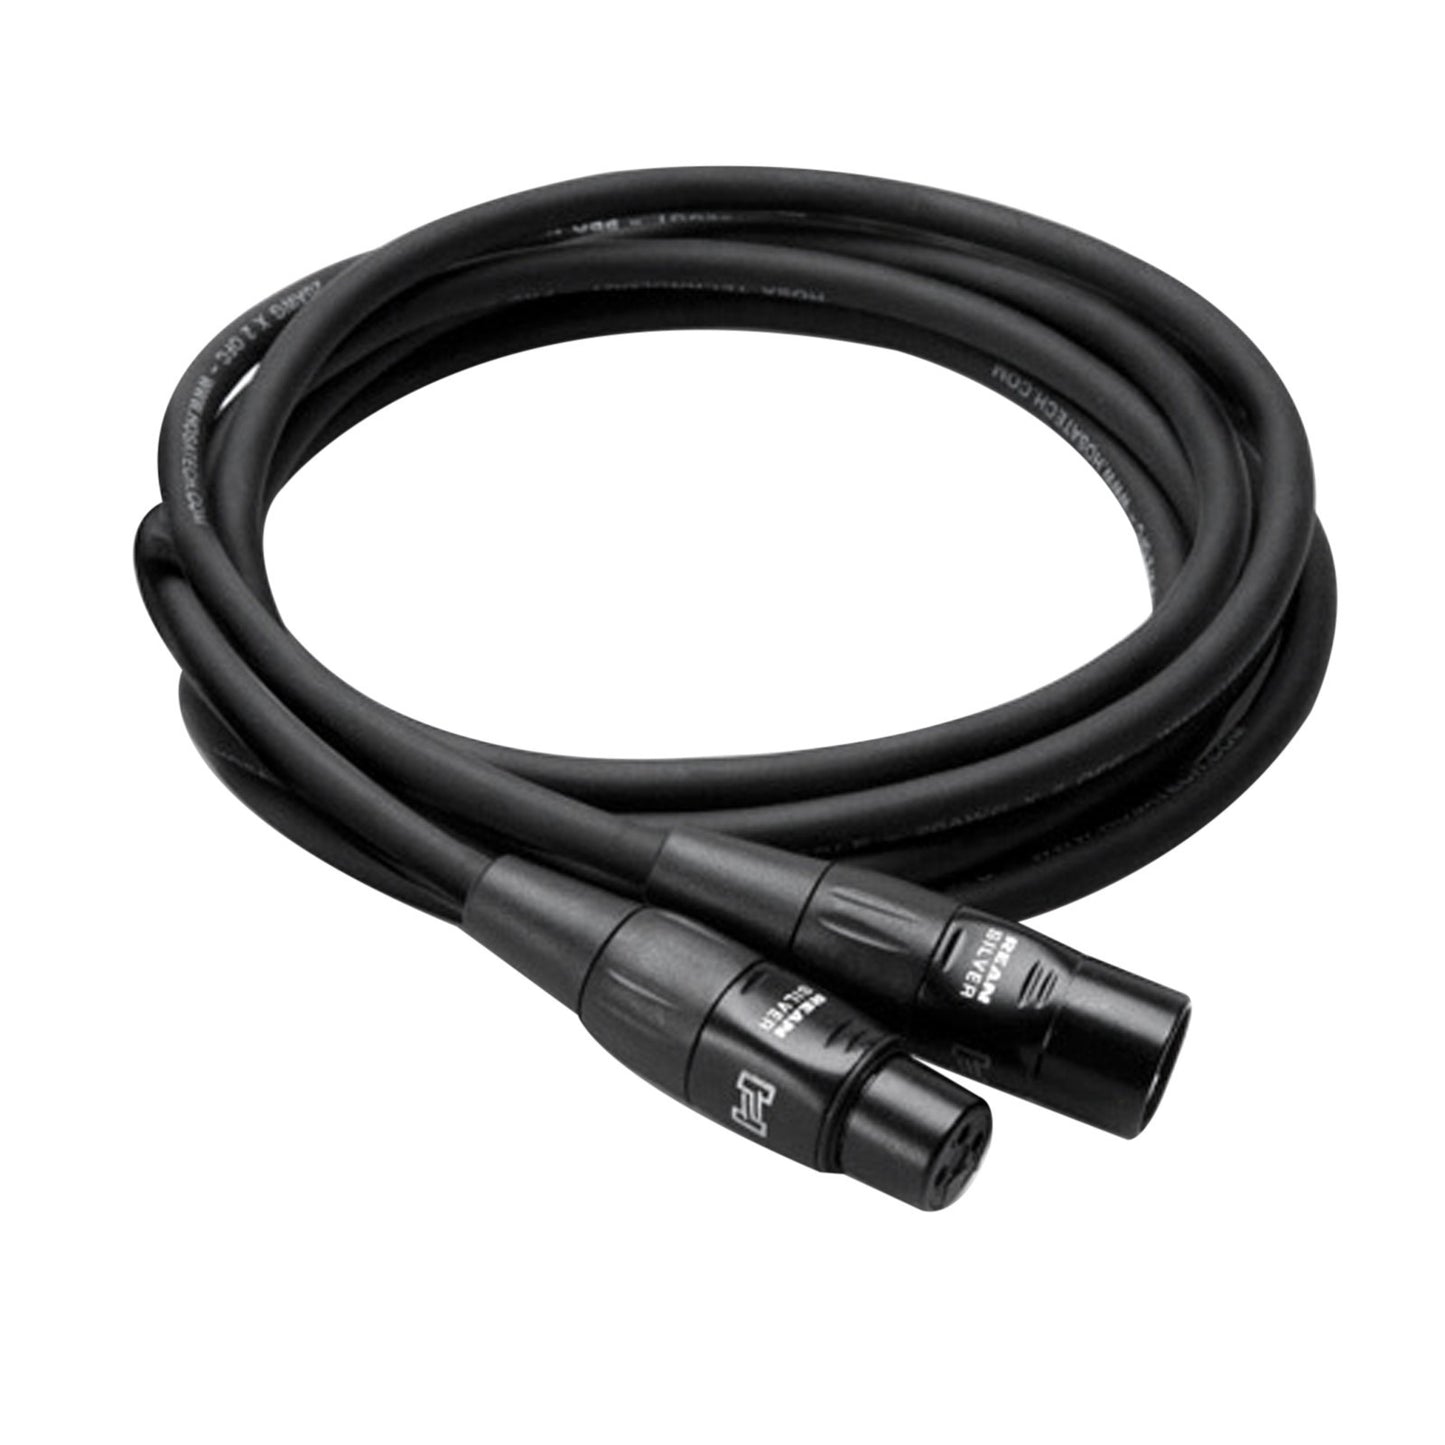 Hosa HMIC-005 Pro Microphone Cable, REAN XLR Female to XLR Male, 5ft